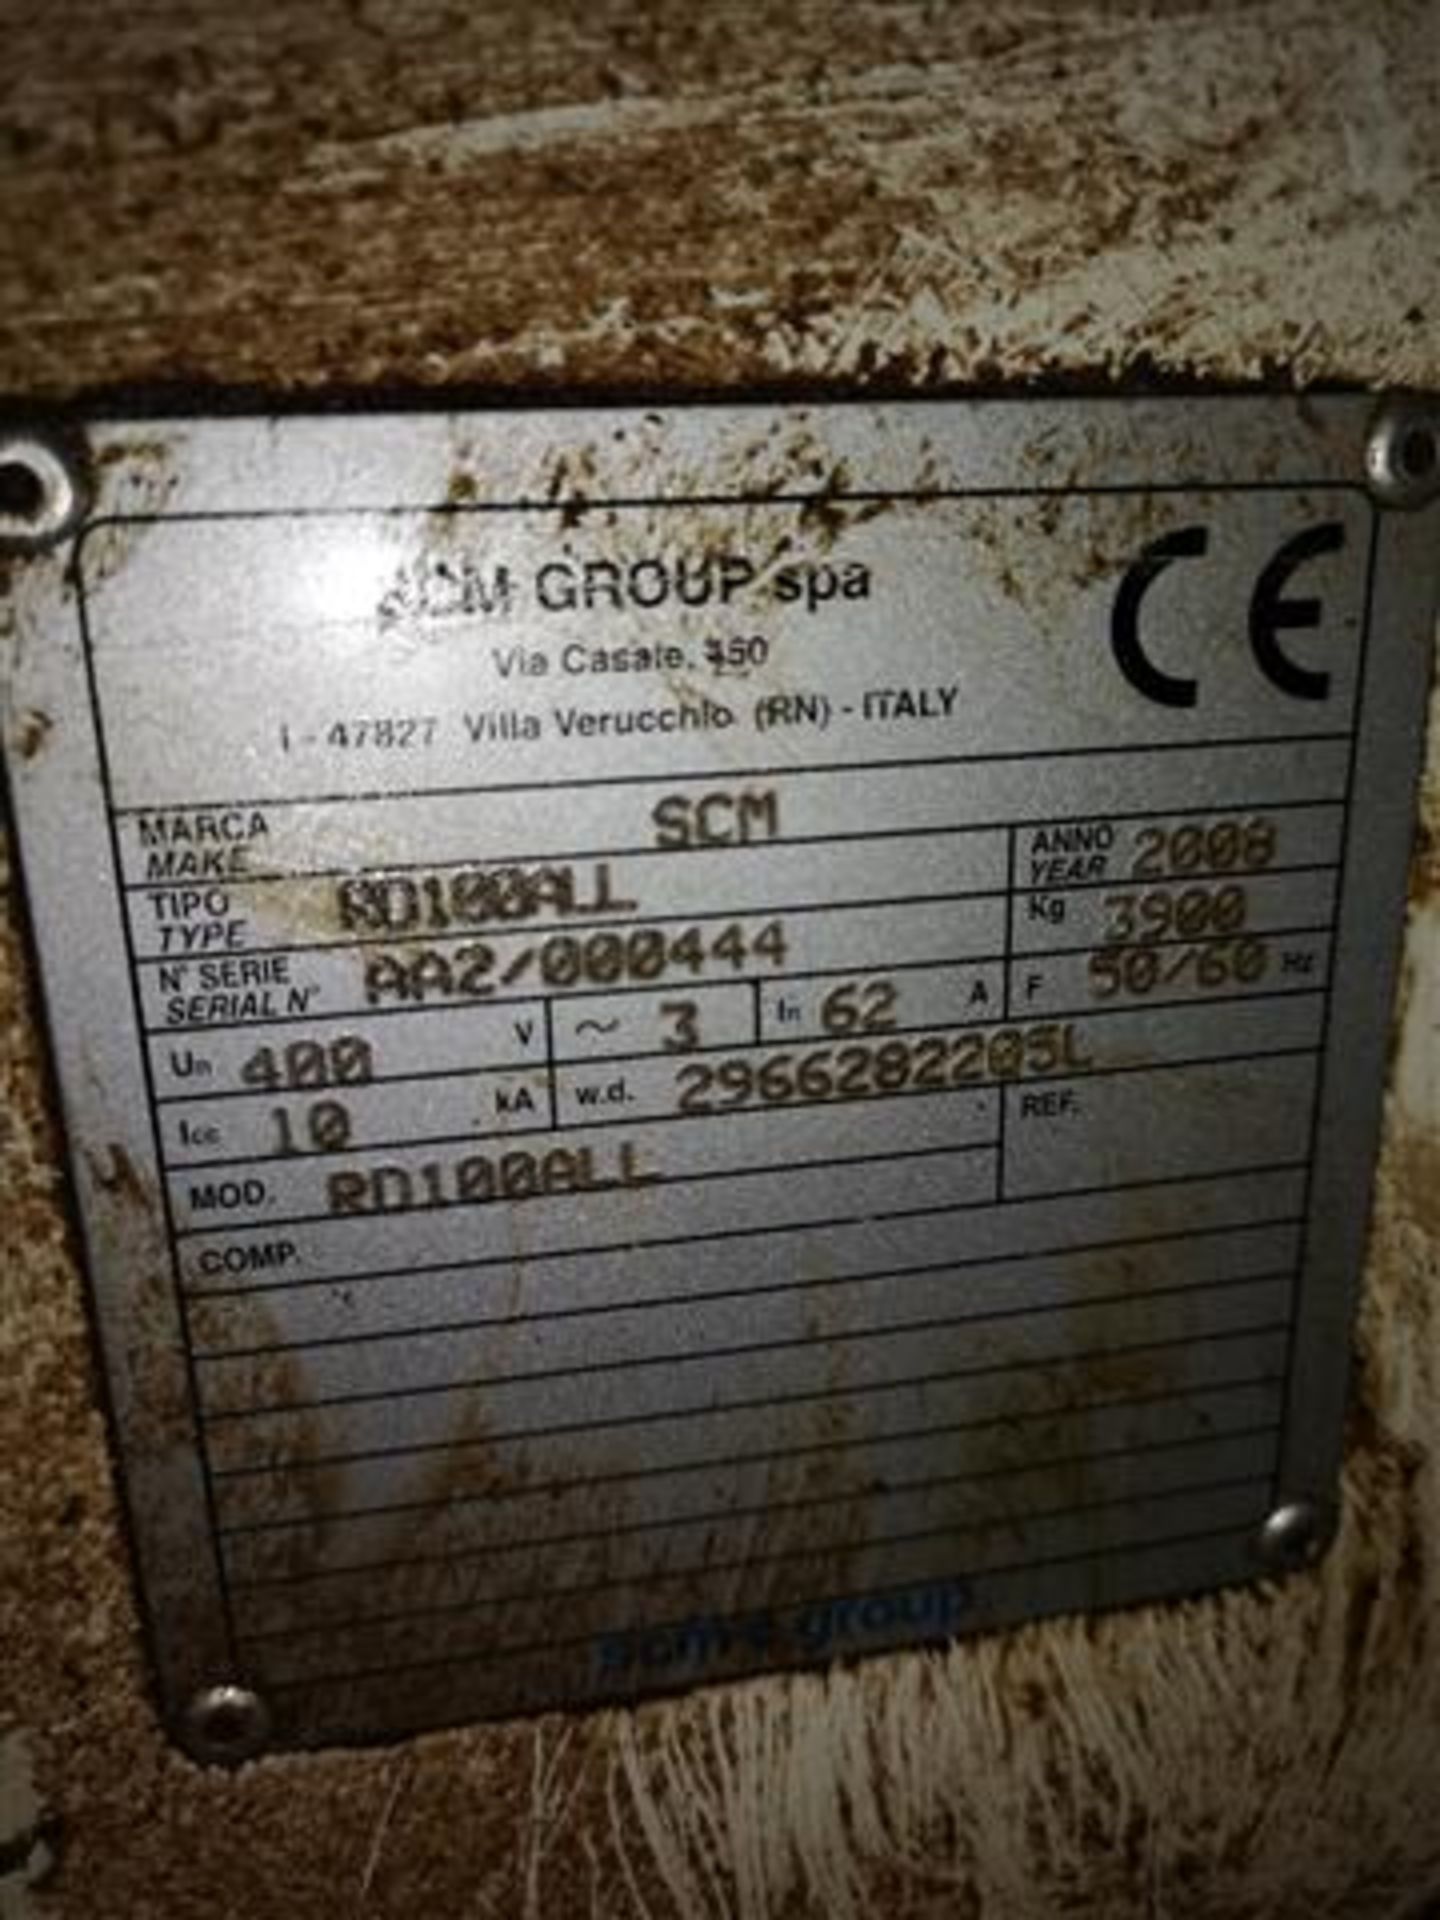 SCM Record 100AL CNC Machining Centre (2008) - Image 4 of 12